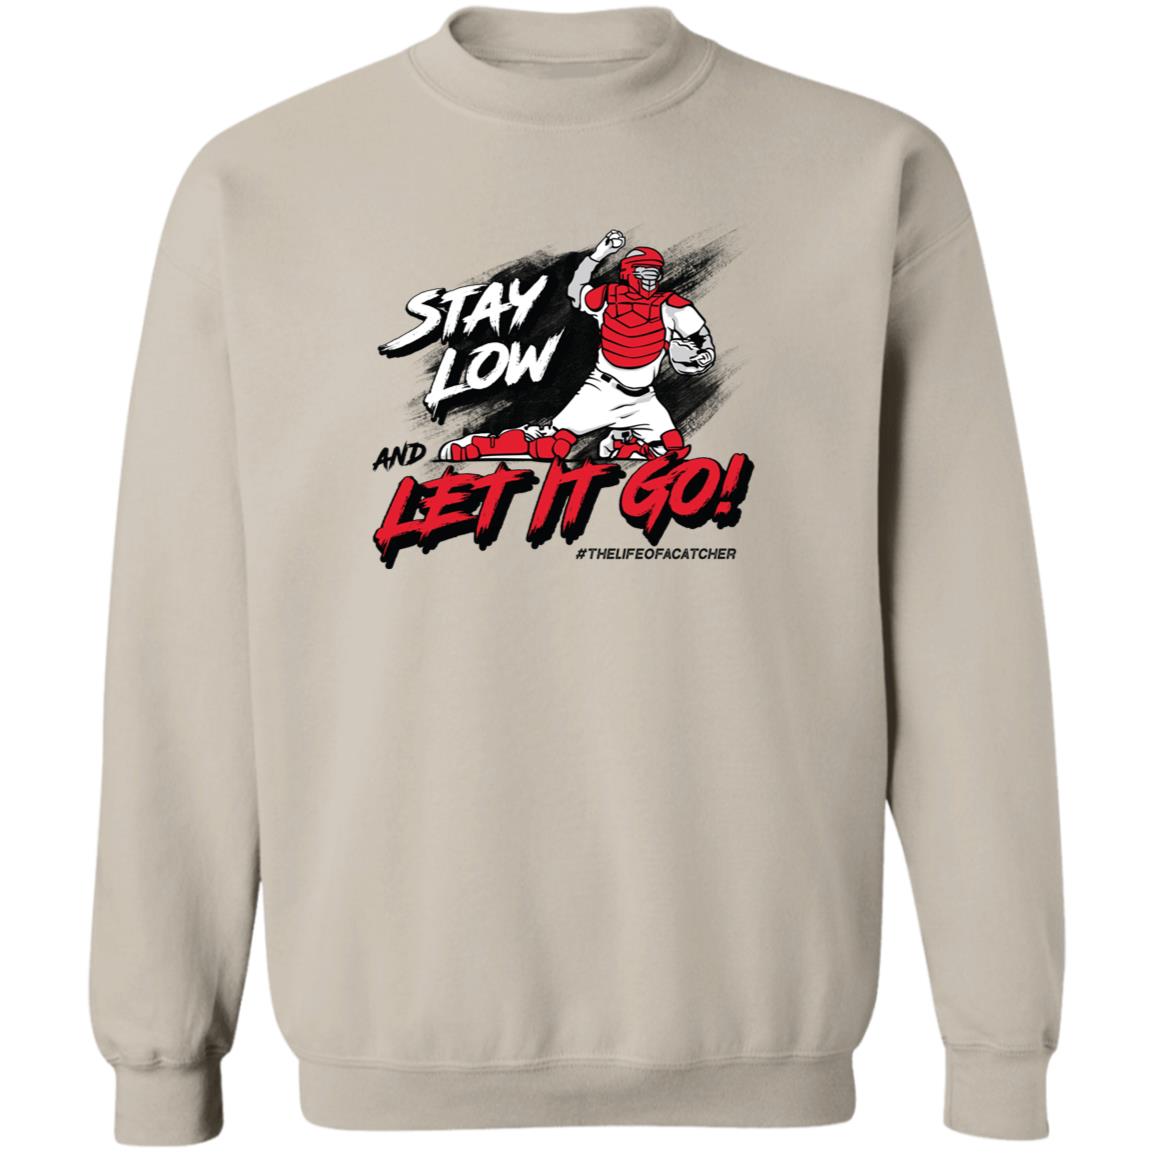 Stay Low & Let It Go Crewneck Sweatshirt - Sand